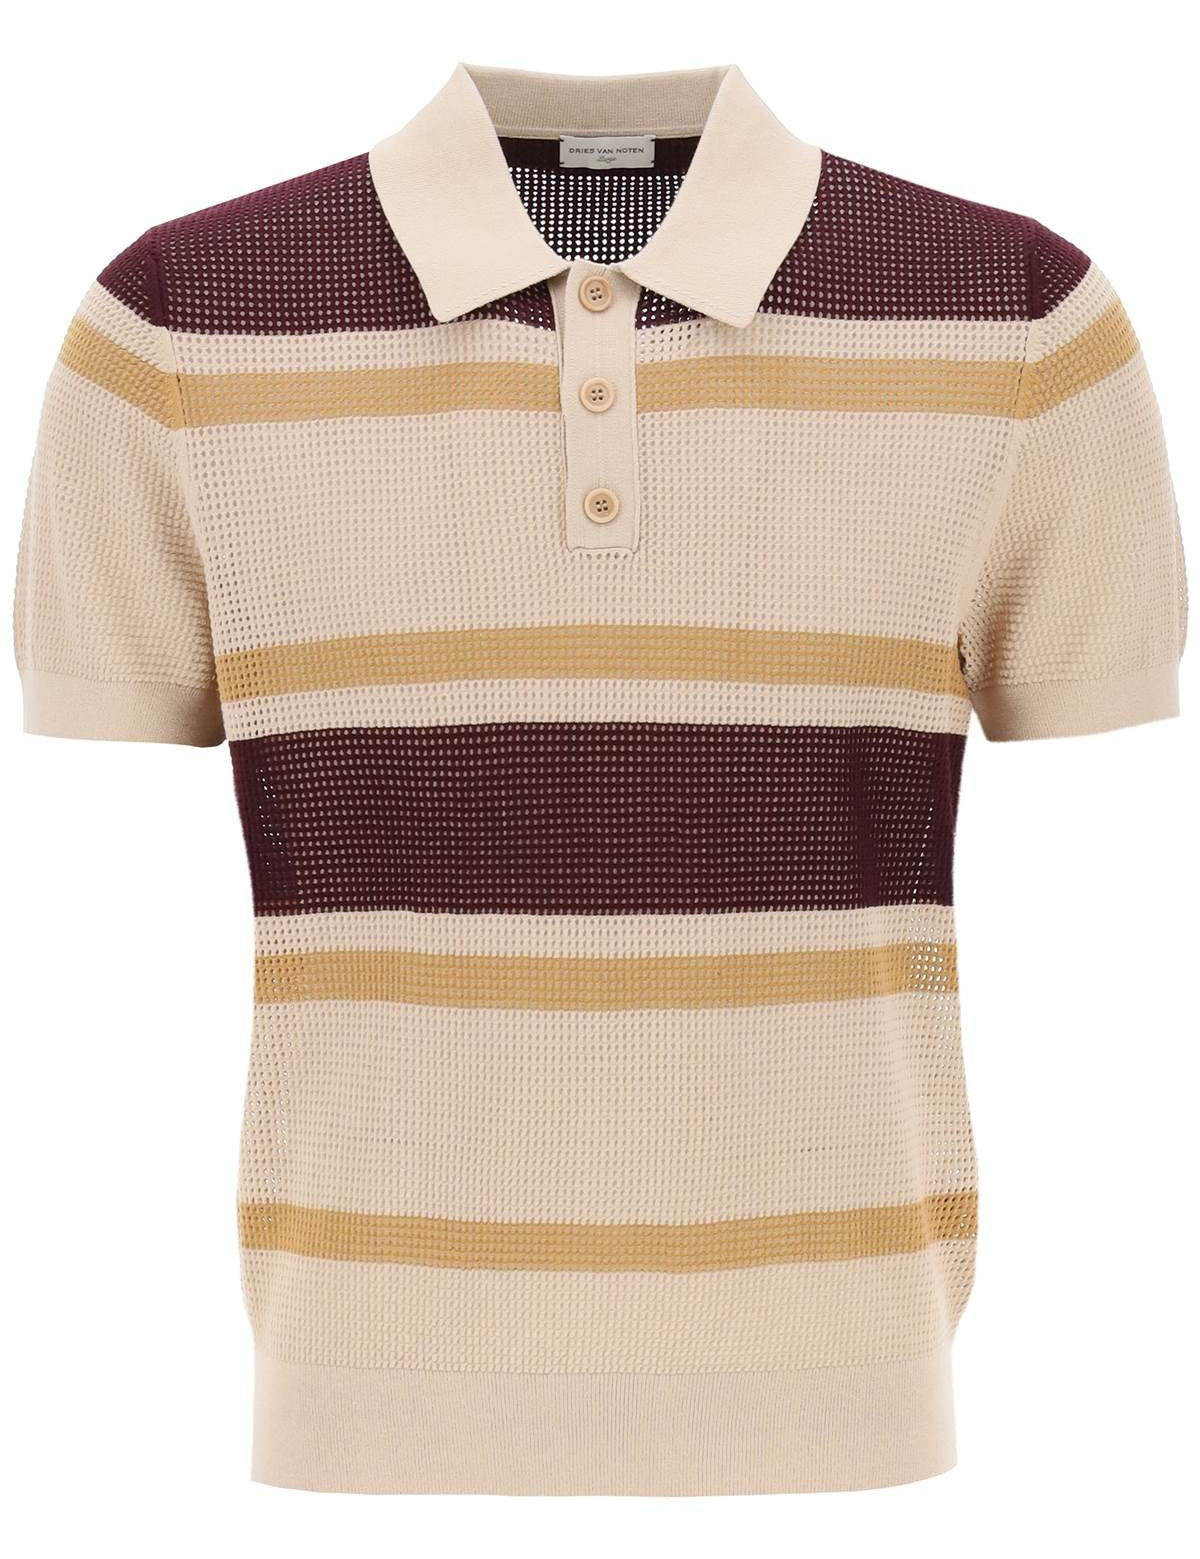 mindo-stripe-perforated-knit-polo-shirt.jpg